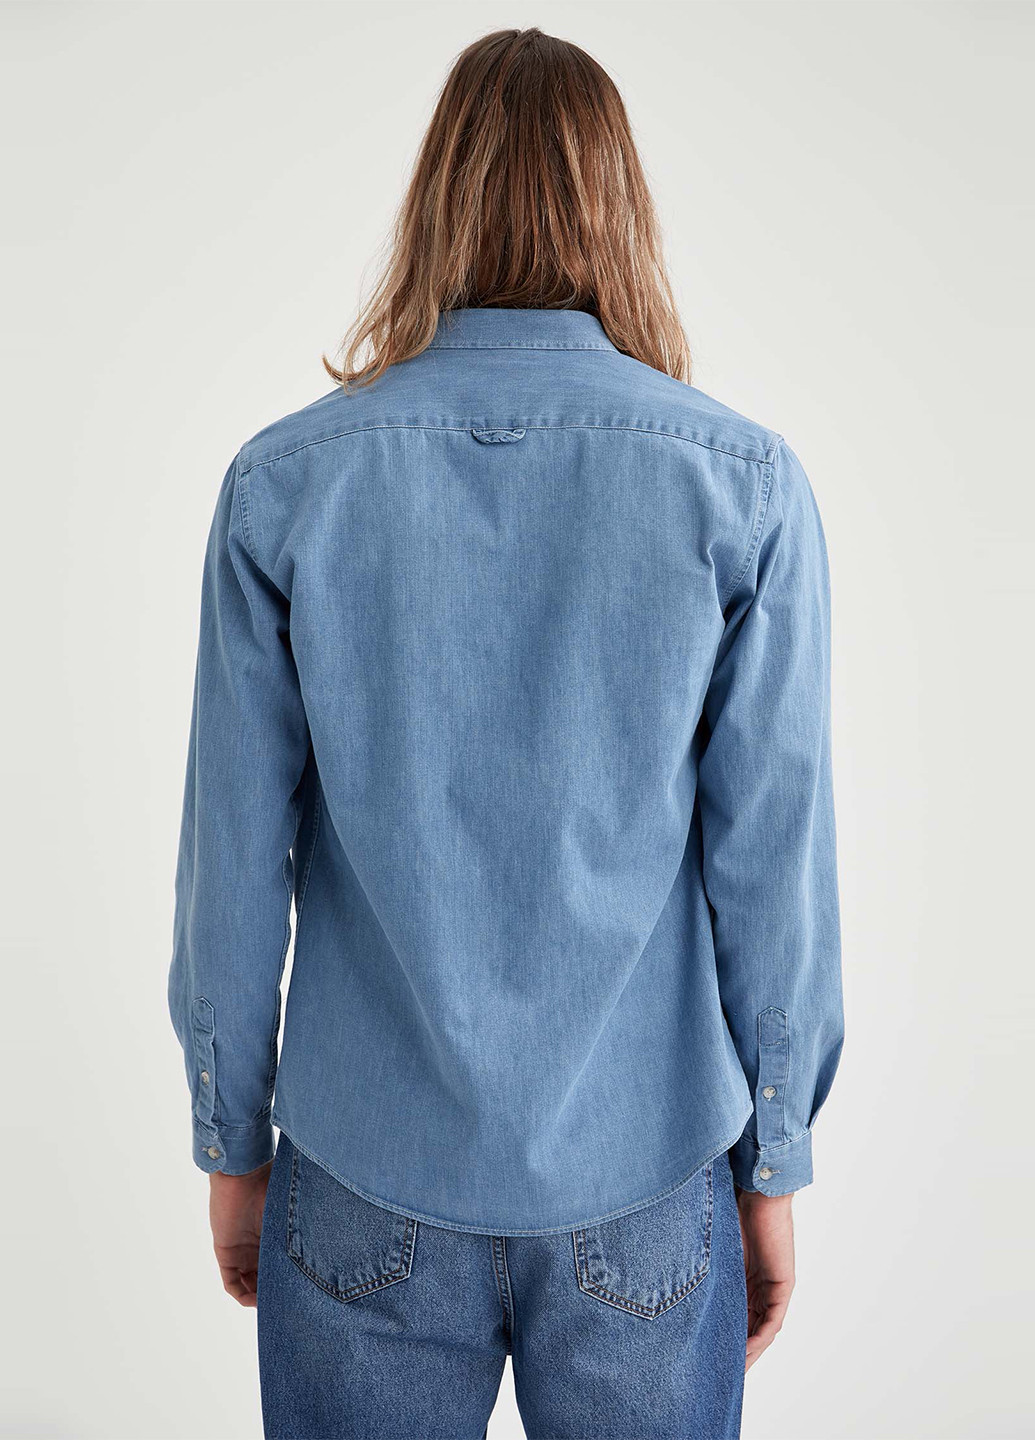 Рубашка DeFacto синя джинсова бавовна